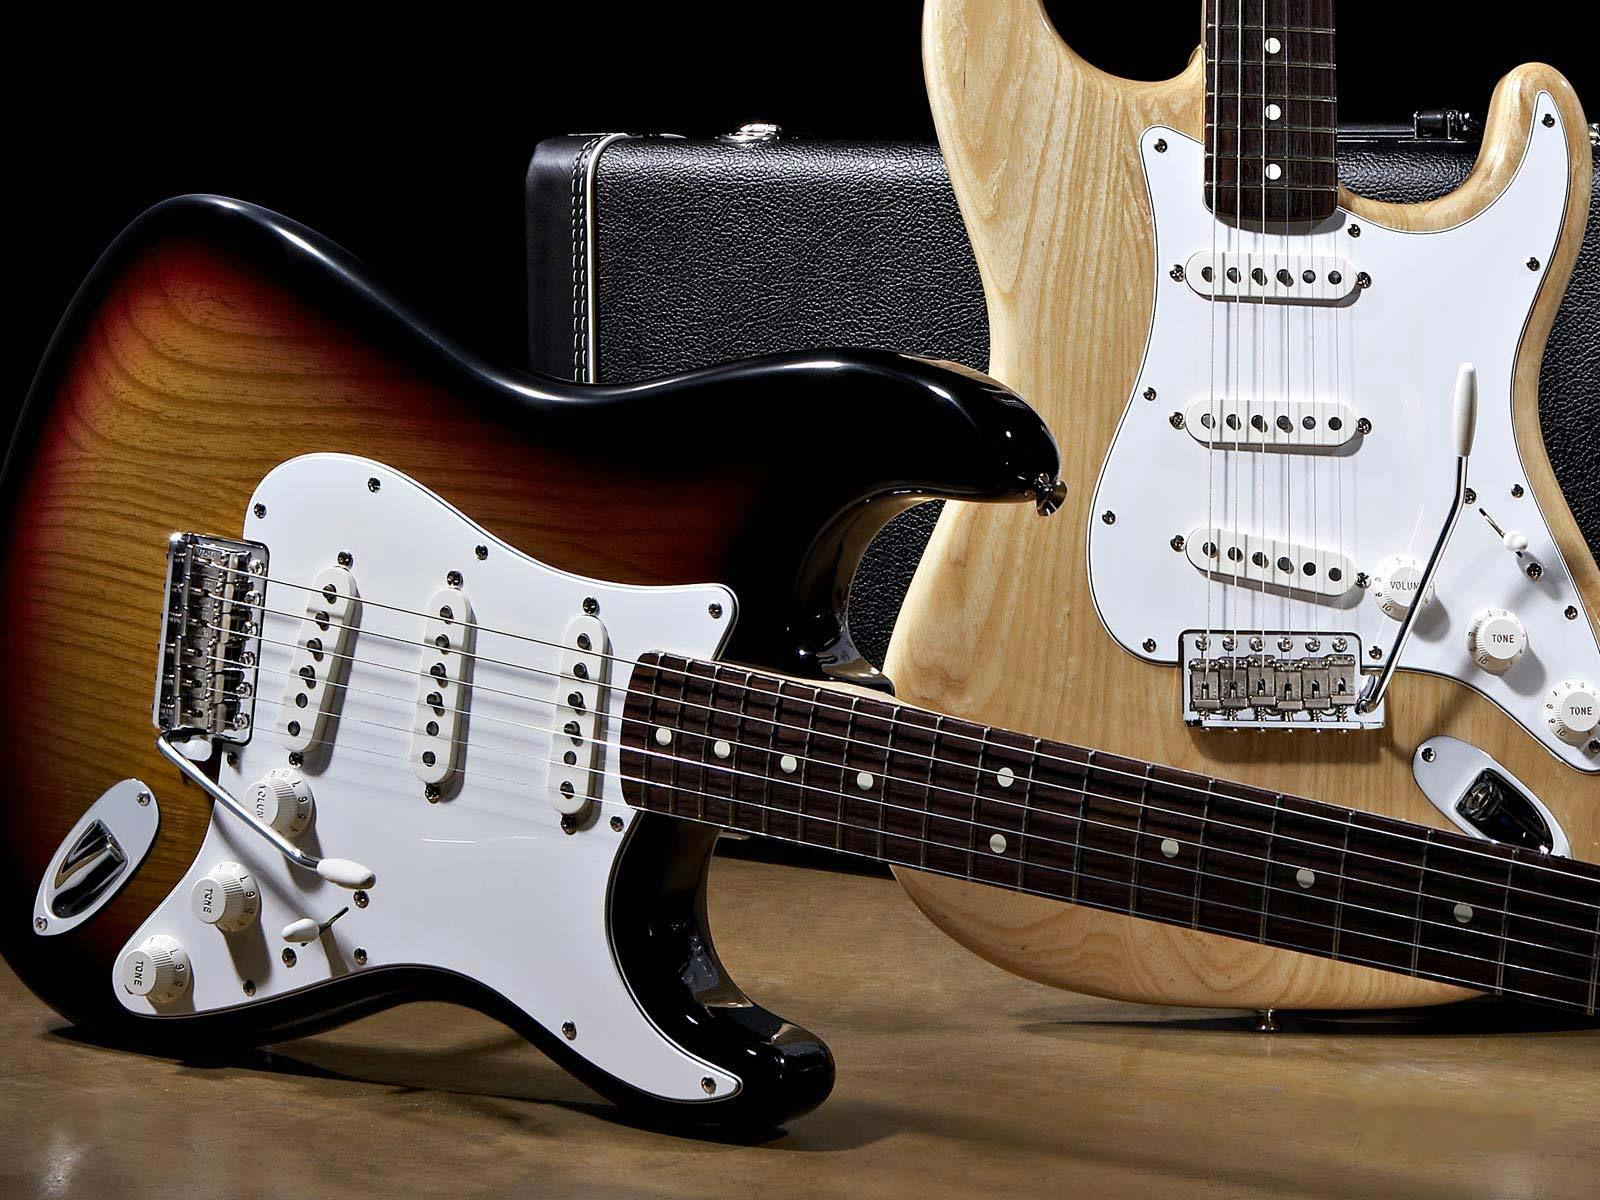 Fender Stratocaster Guitar - Fender Stratocaster Wallpaper Hd - HD Wallpaper 